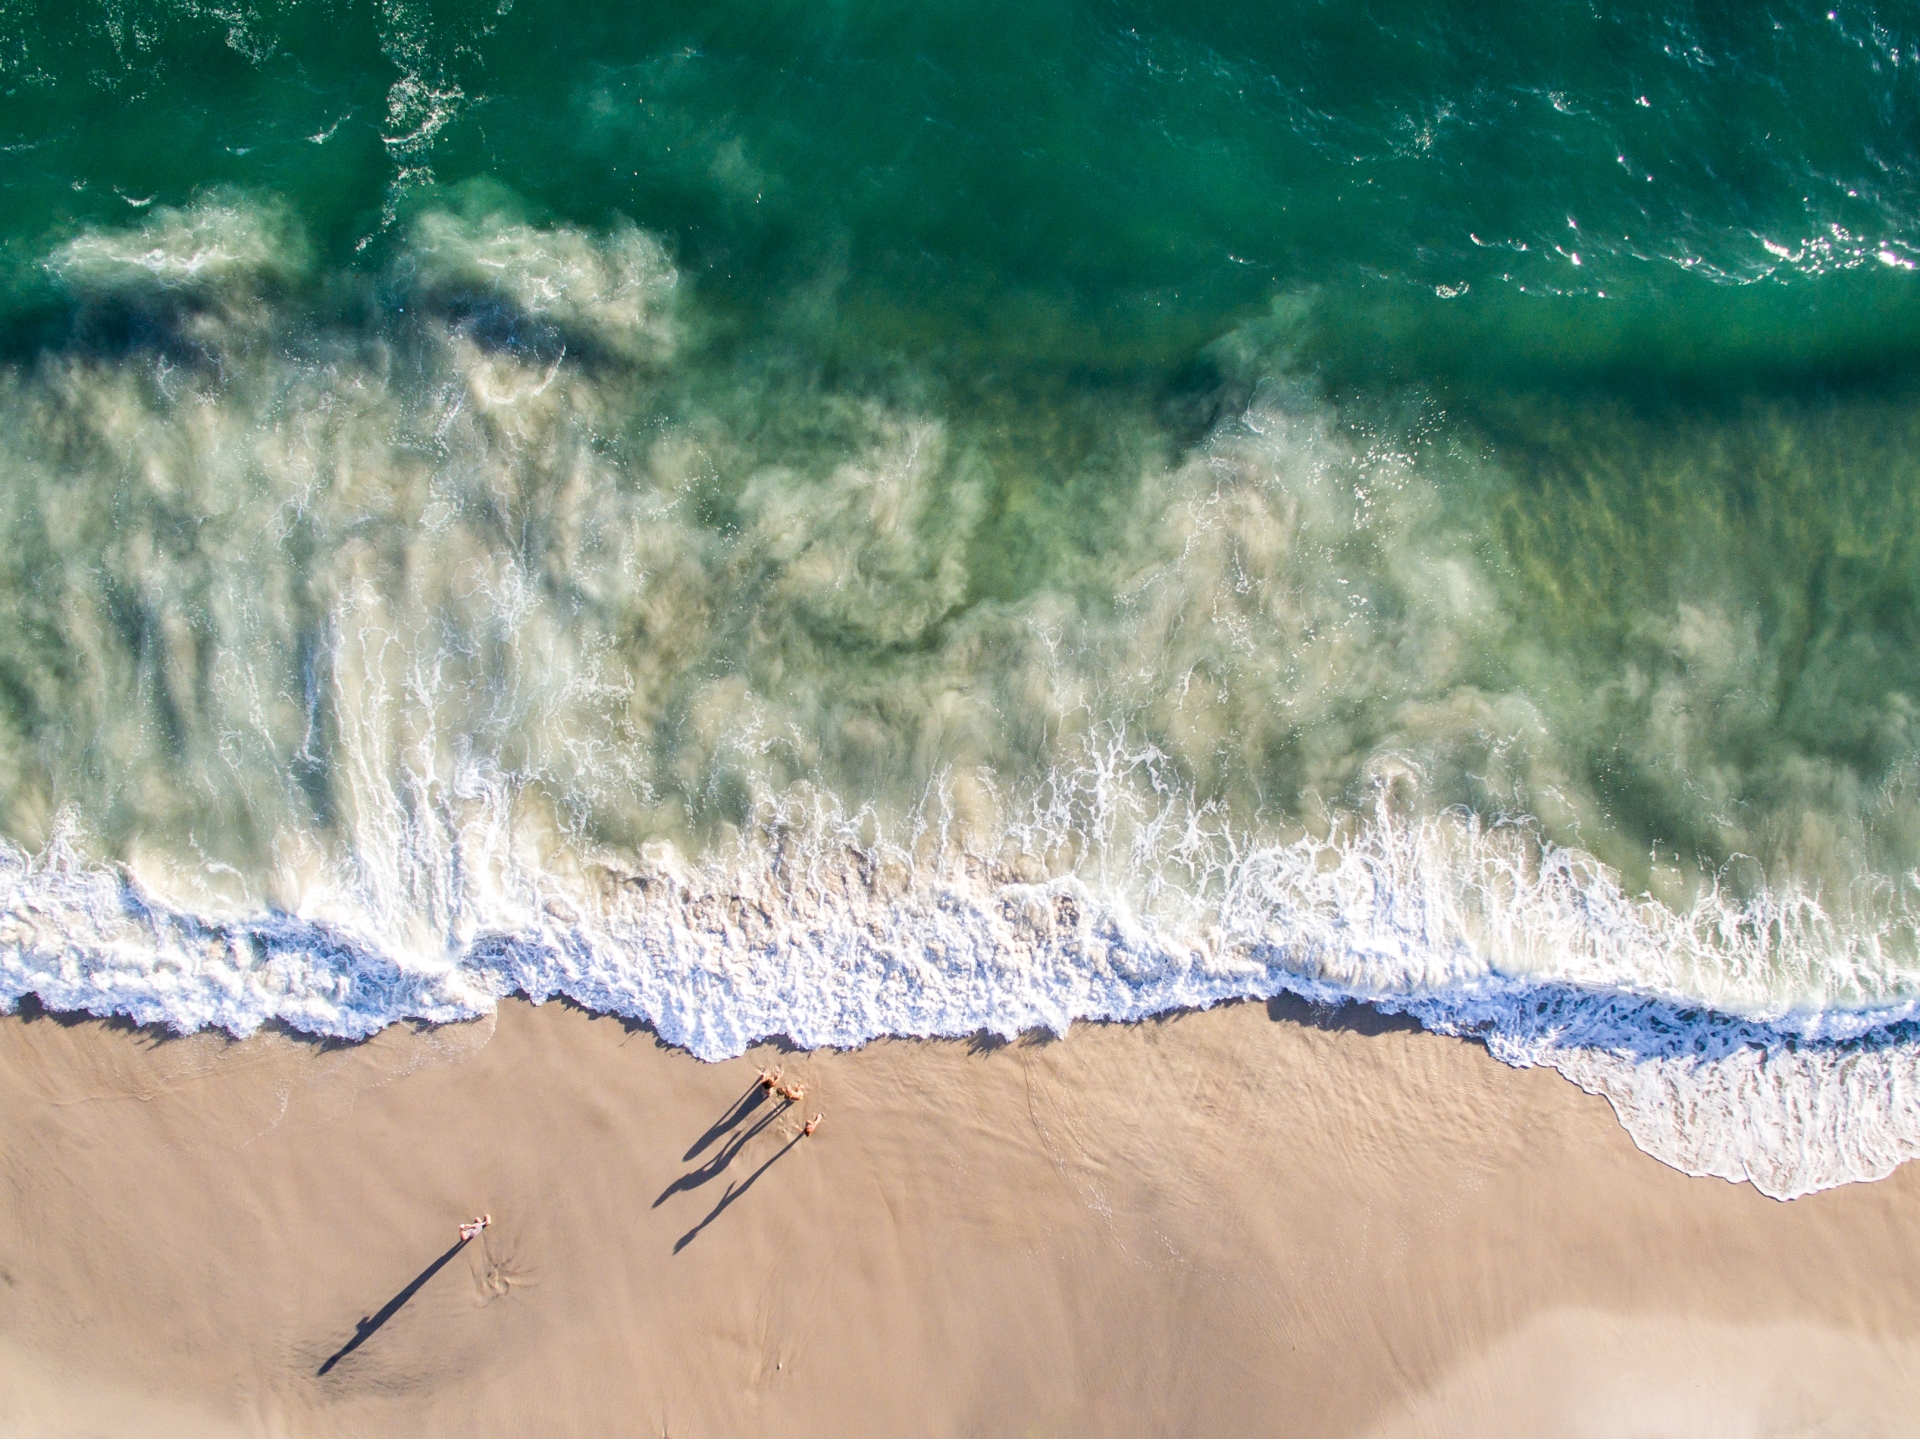 Surf and beach - Brazil  